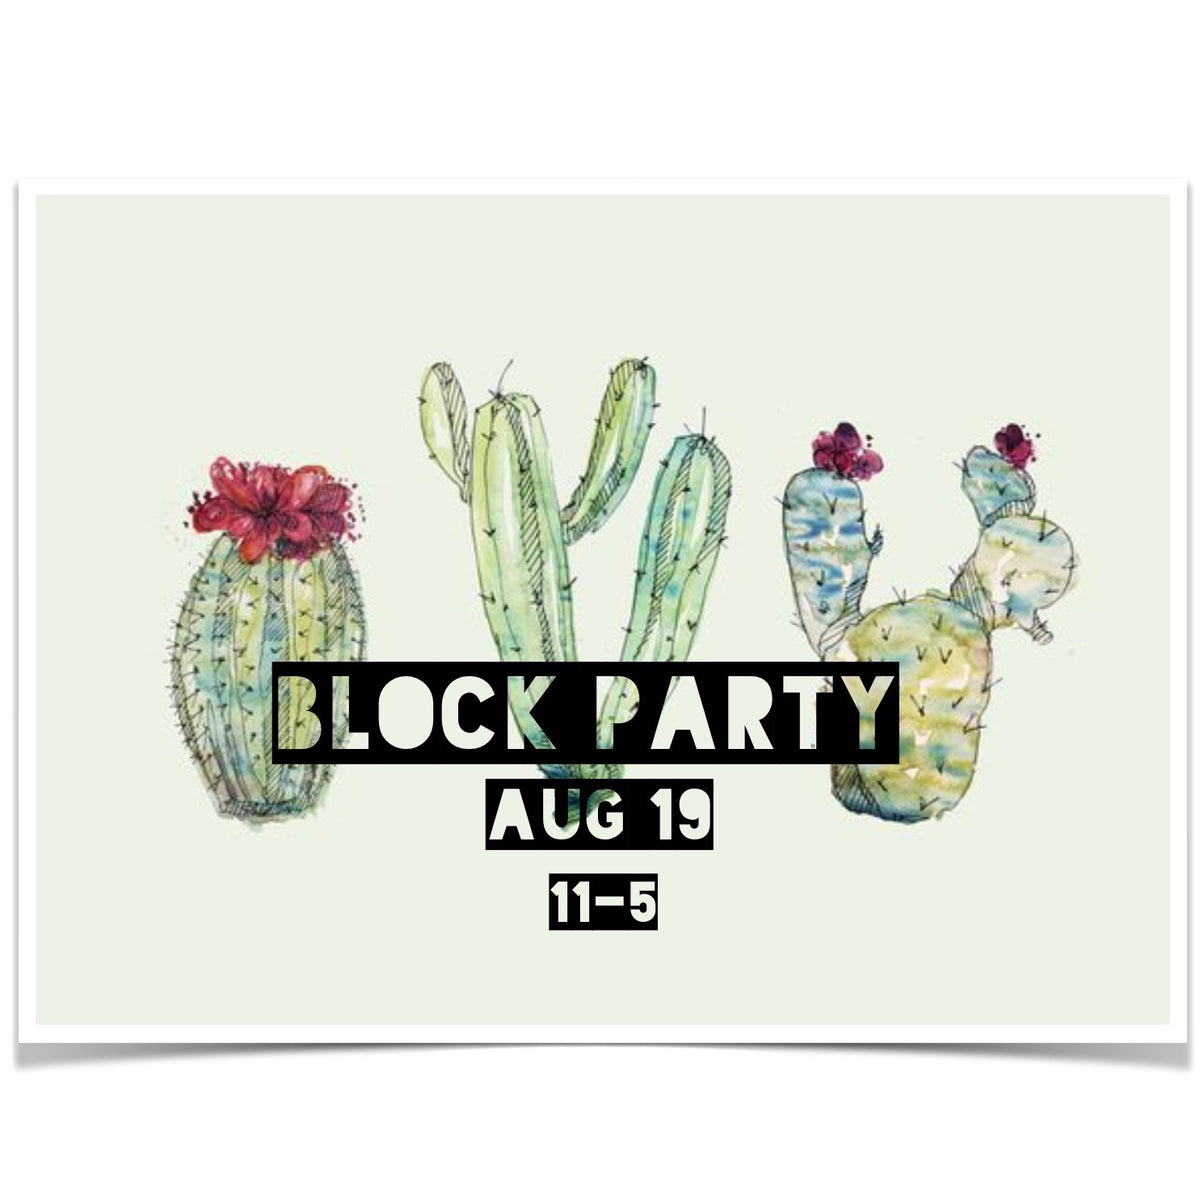 BLOCK PARTY - Where Venice Blvd Meets Glyndon